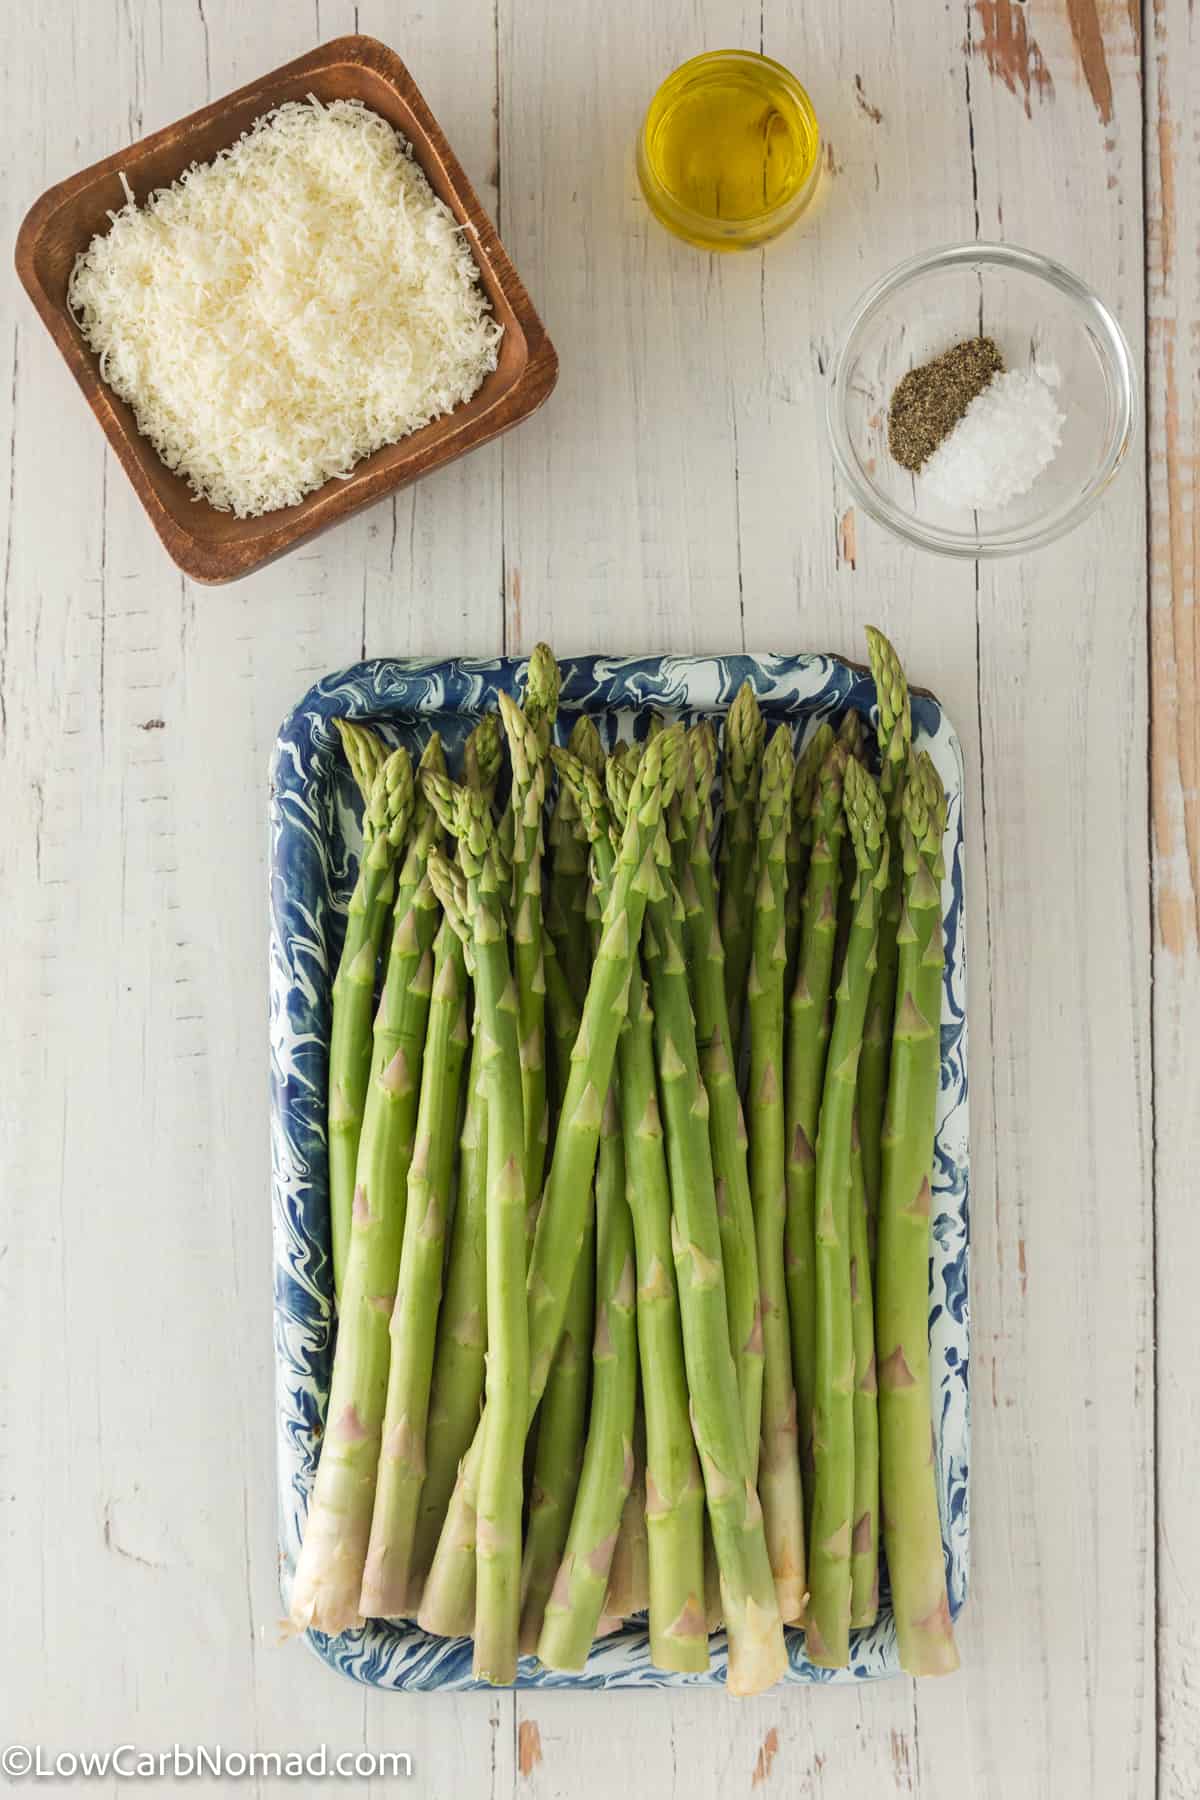 Parmesan Asparagus Recipe ingredients